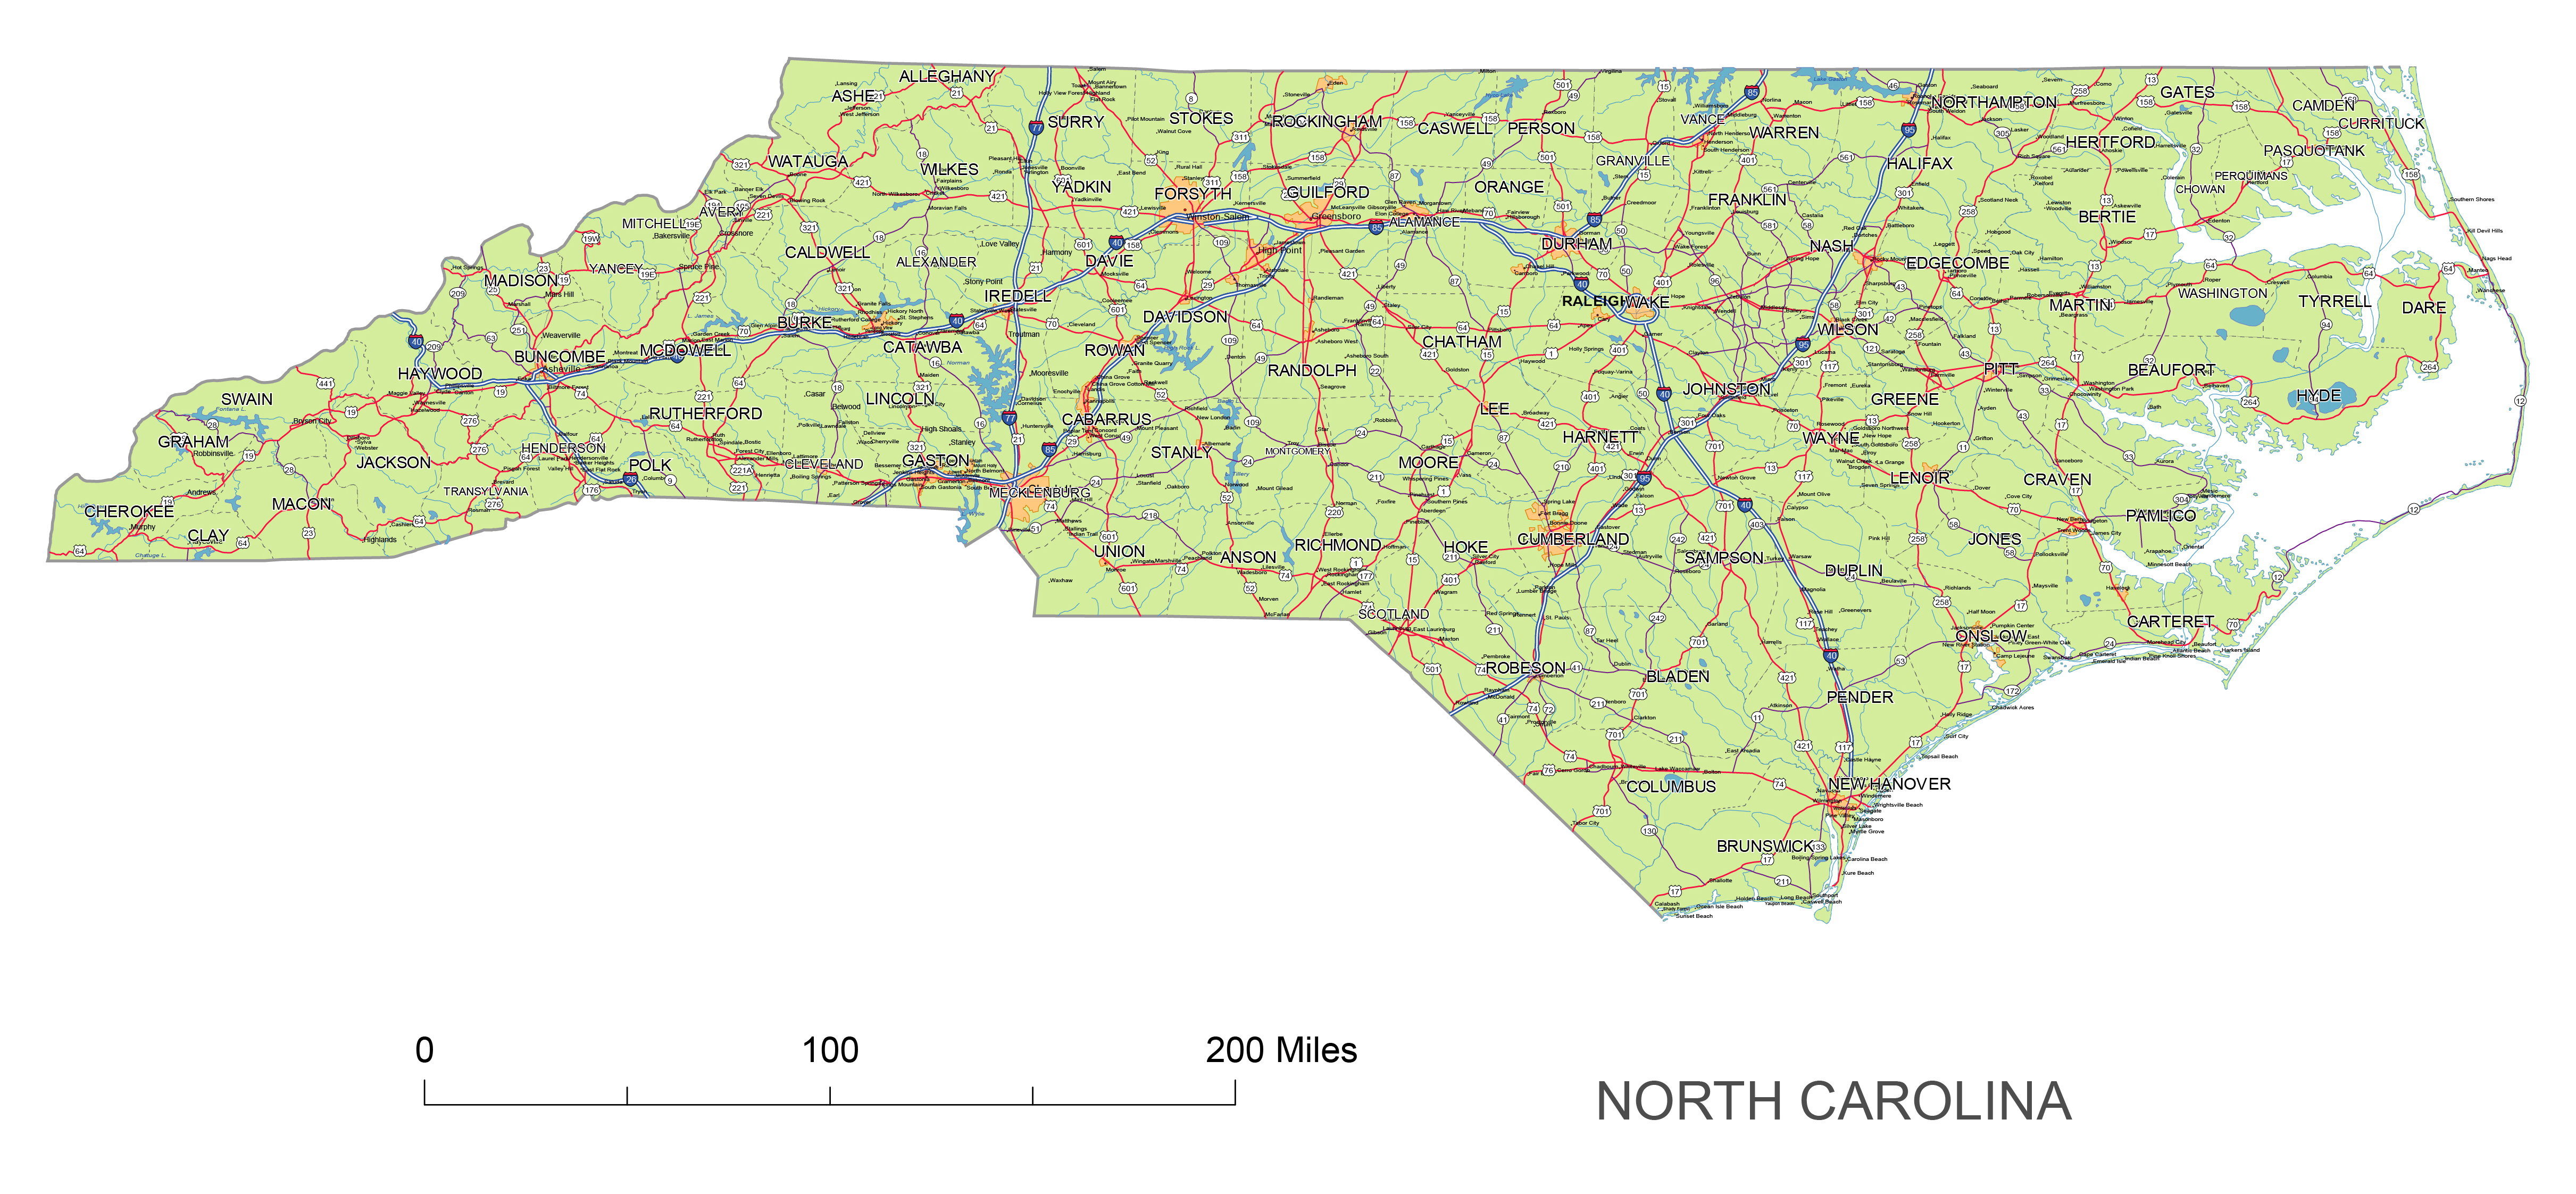 North Carolina State Map In Adobe Illustrator Vector Format Detailed 608